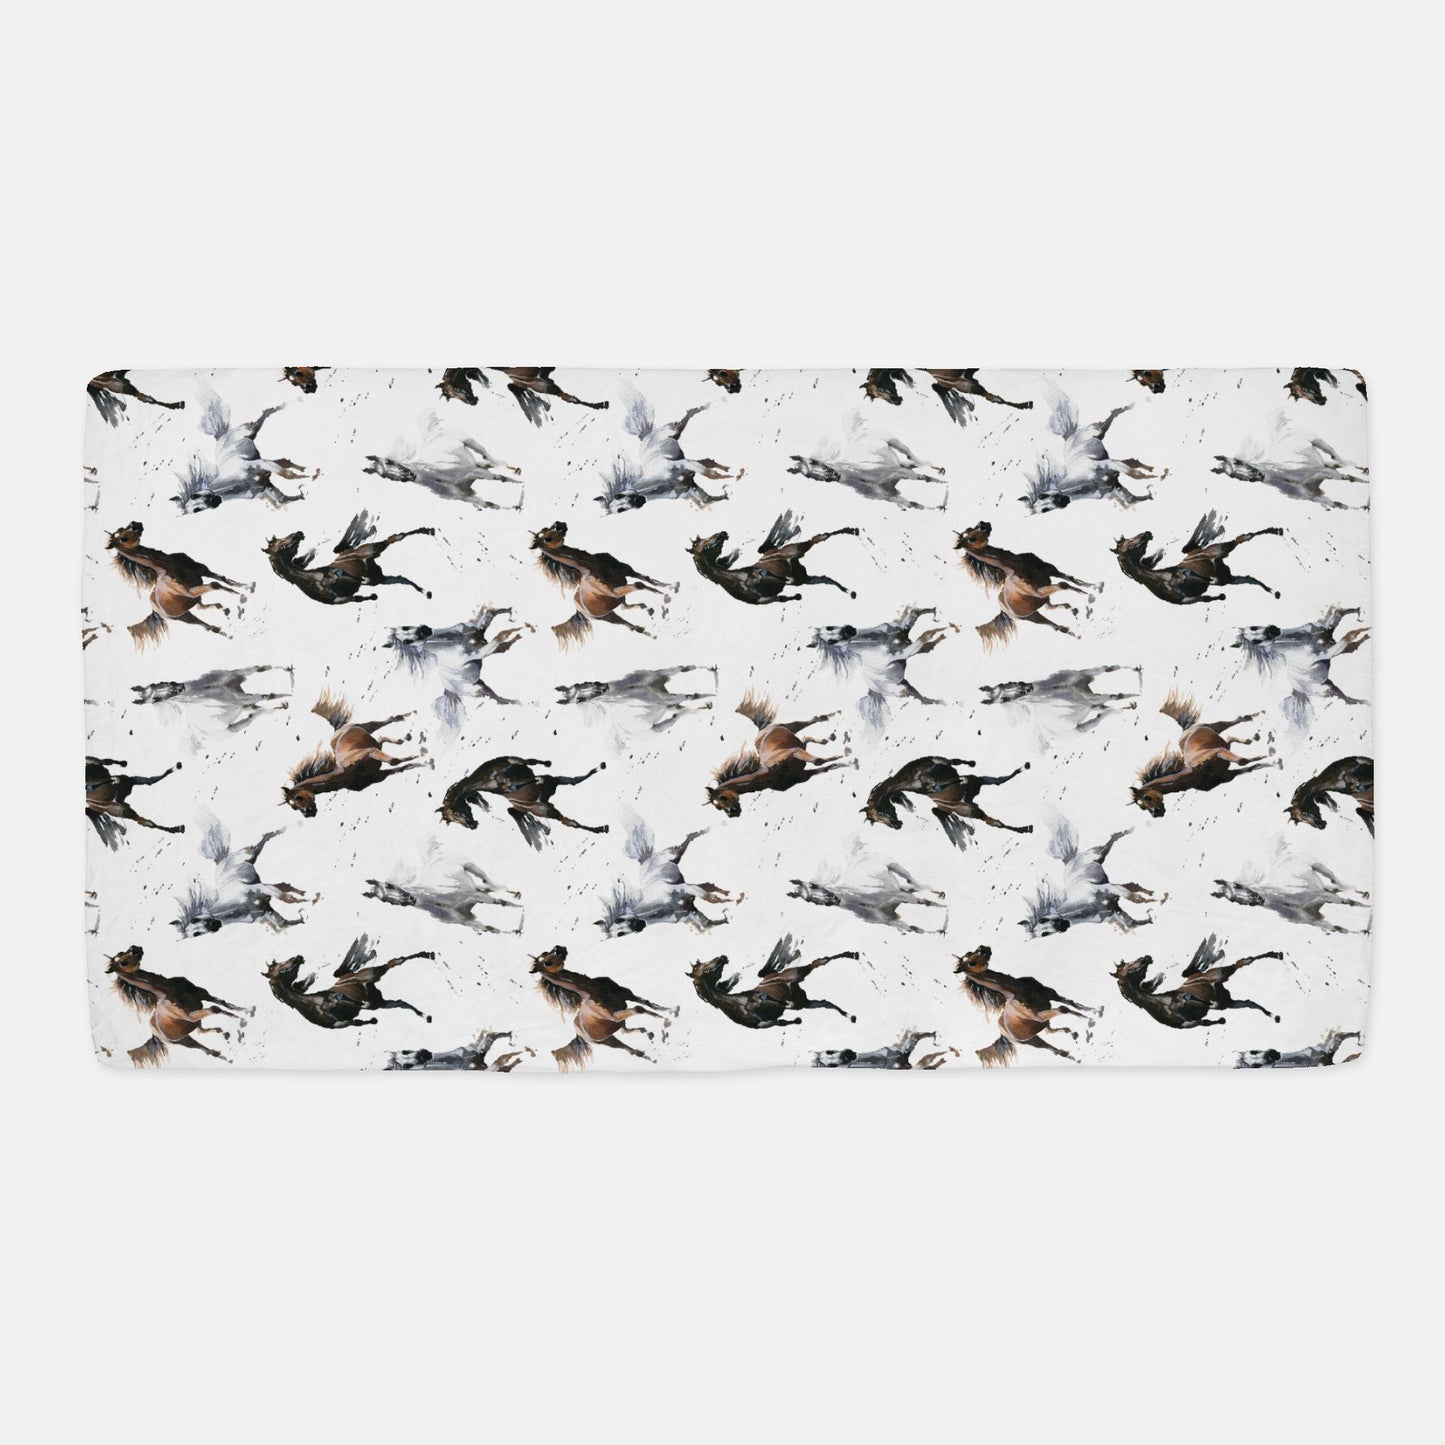 Horses Crib Sheet, Equestrian Nursery Bedding - Wild Spirit